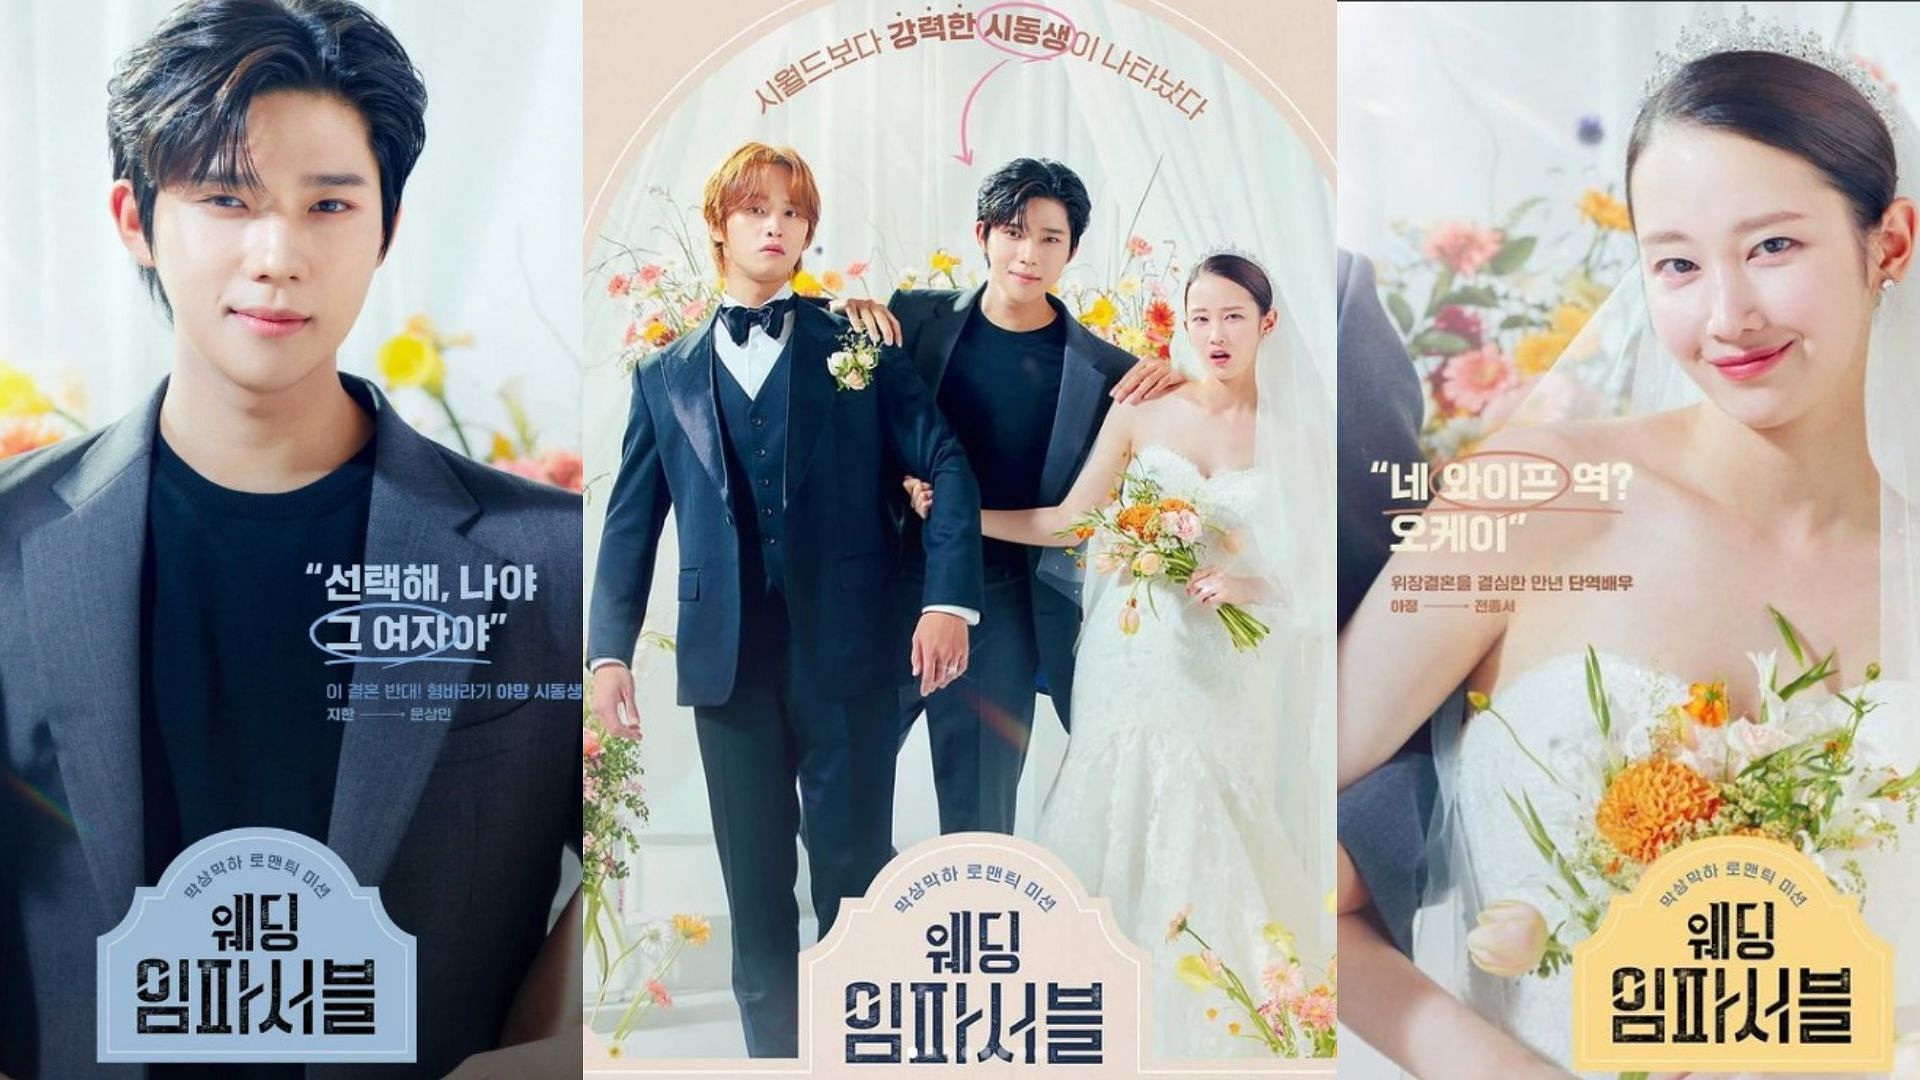 Featuring Wedding Impossible Cast (Image via tvN/Instagram)